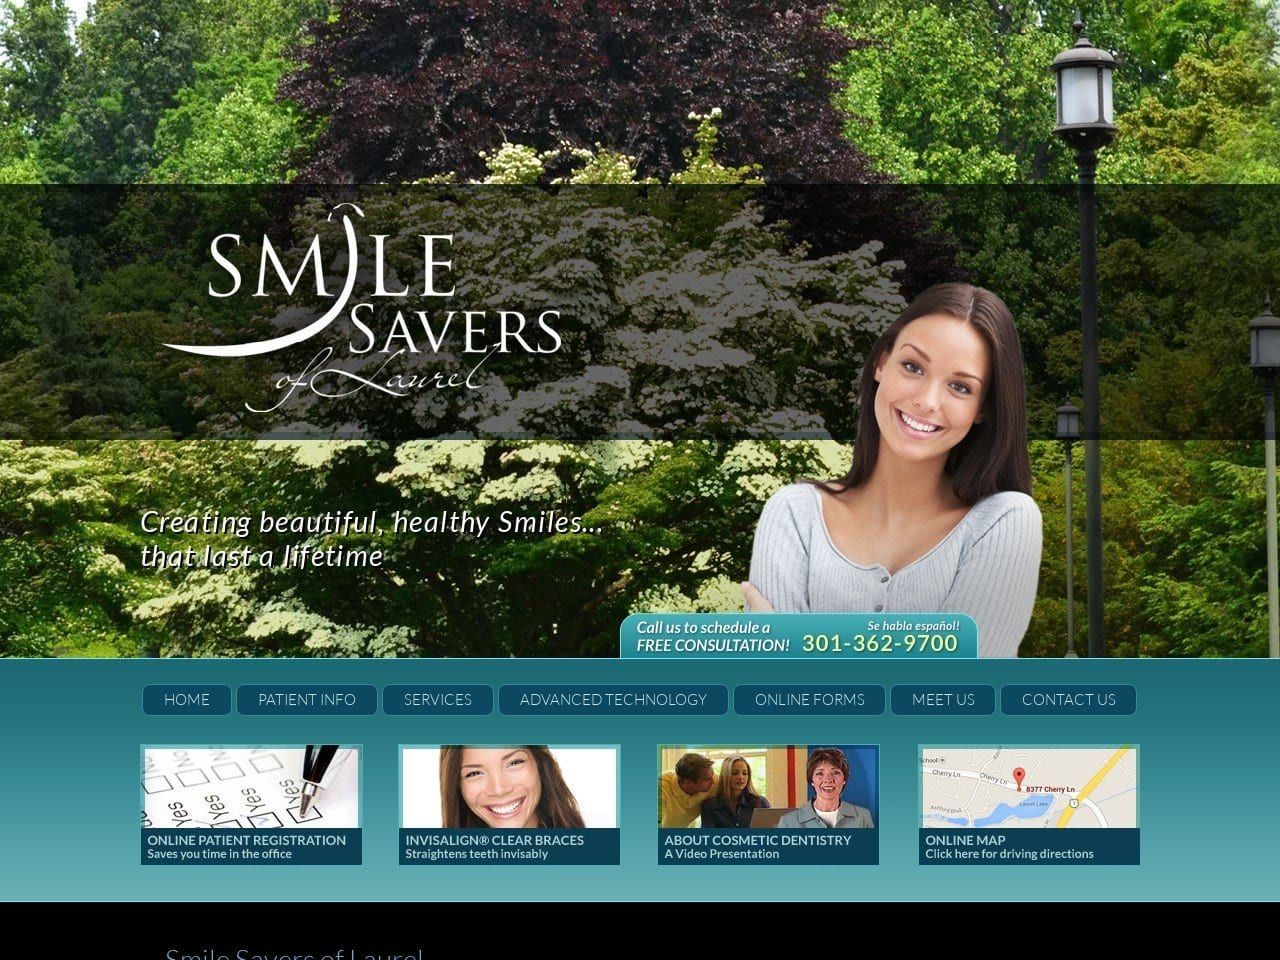 Smile Savers of Laurel Website Screenshot from smilesaversoflaurel.com